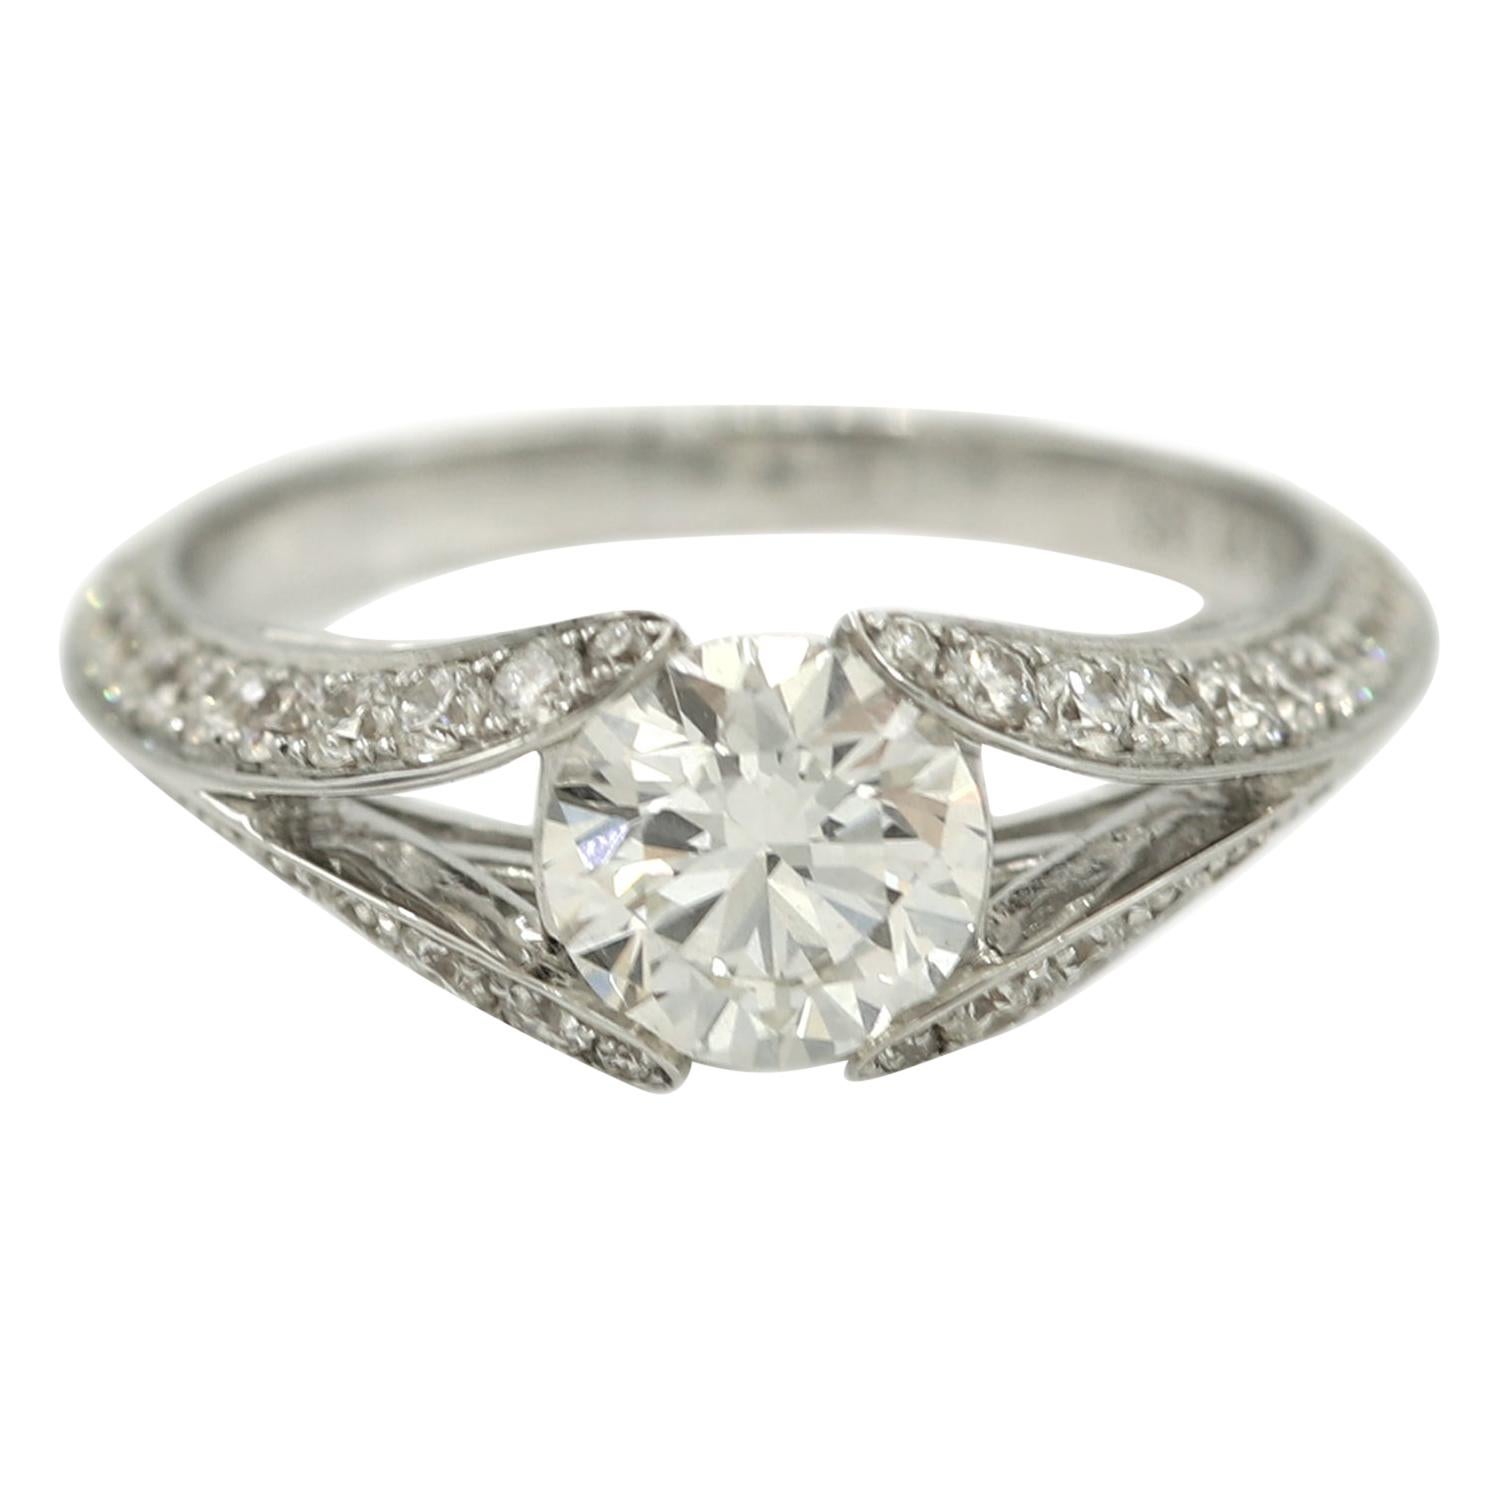 Embedded Diamond in Design Ring 1.04 Carat GIA Certificate 18 Karat White Gold For Sale